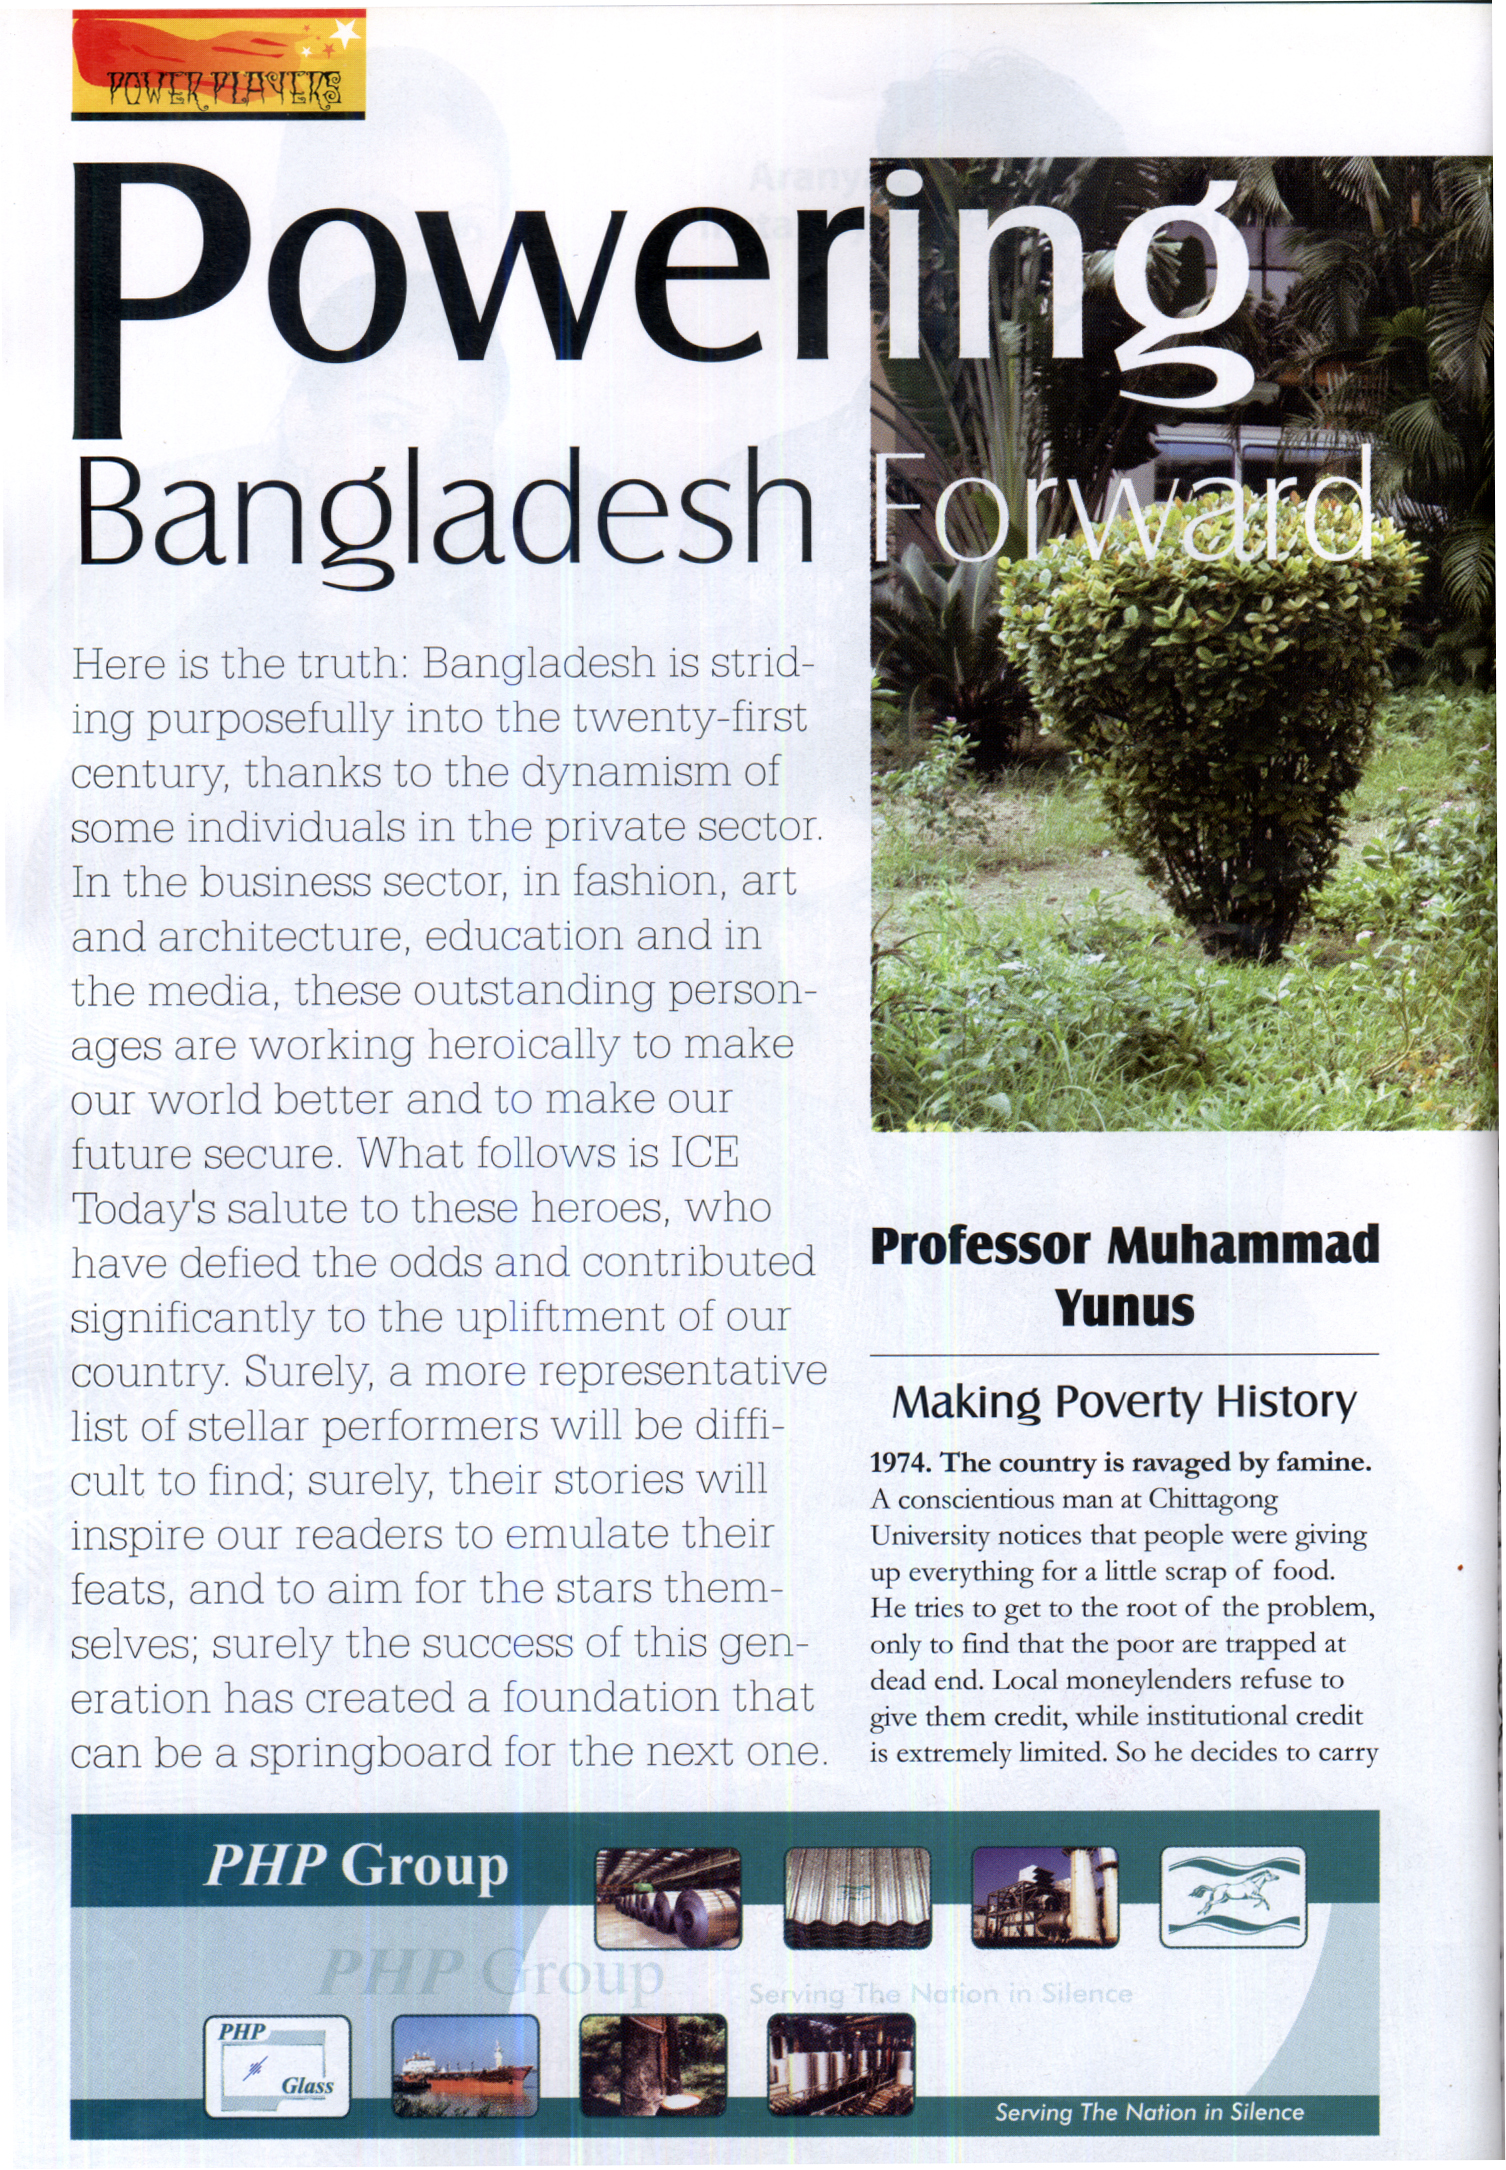 Magazine scan of "Powering Bangladesh Forward" cover story